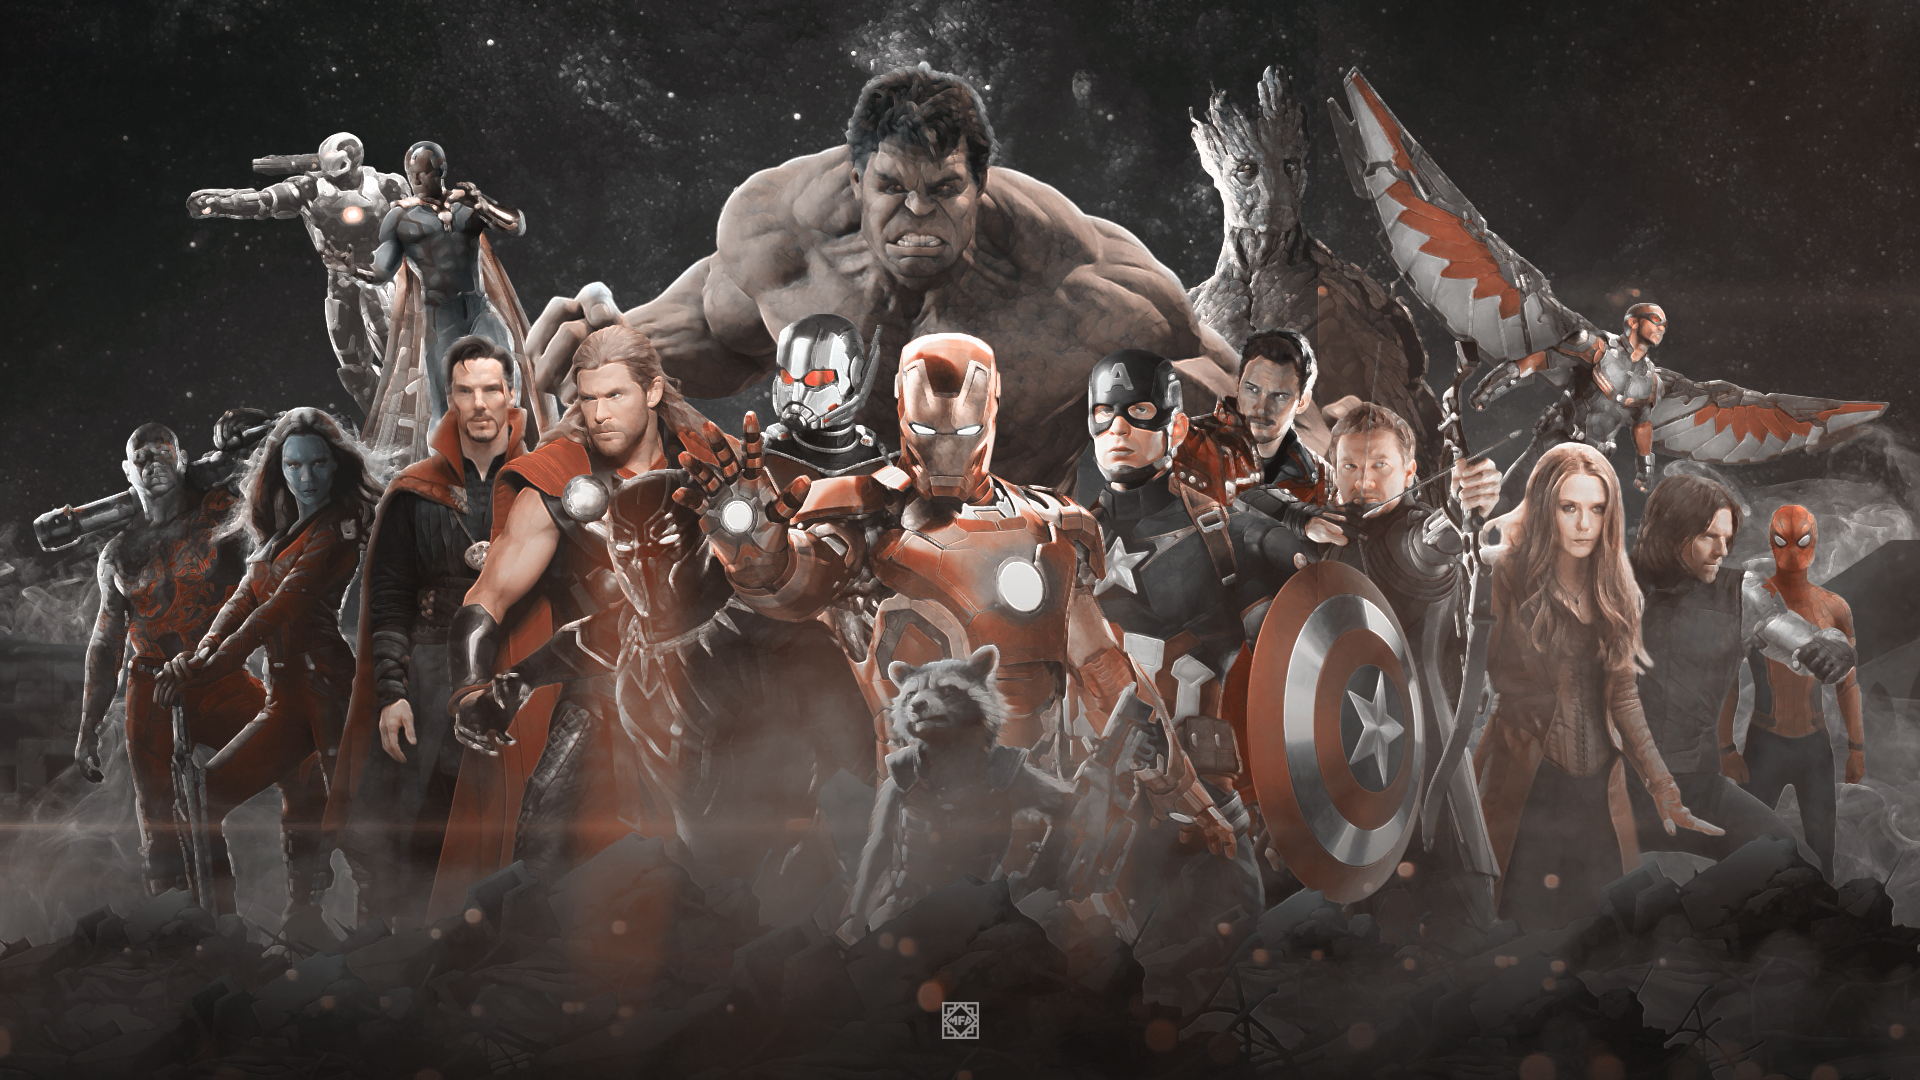 Free download The Avengers Infinity War Wallpaper